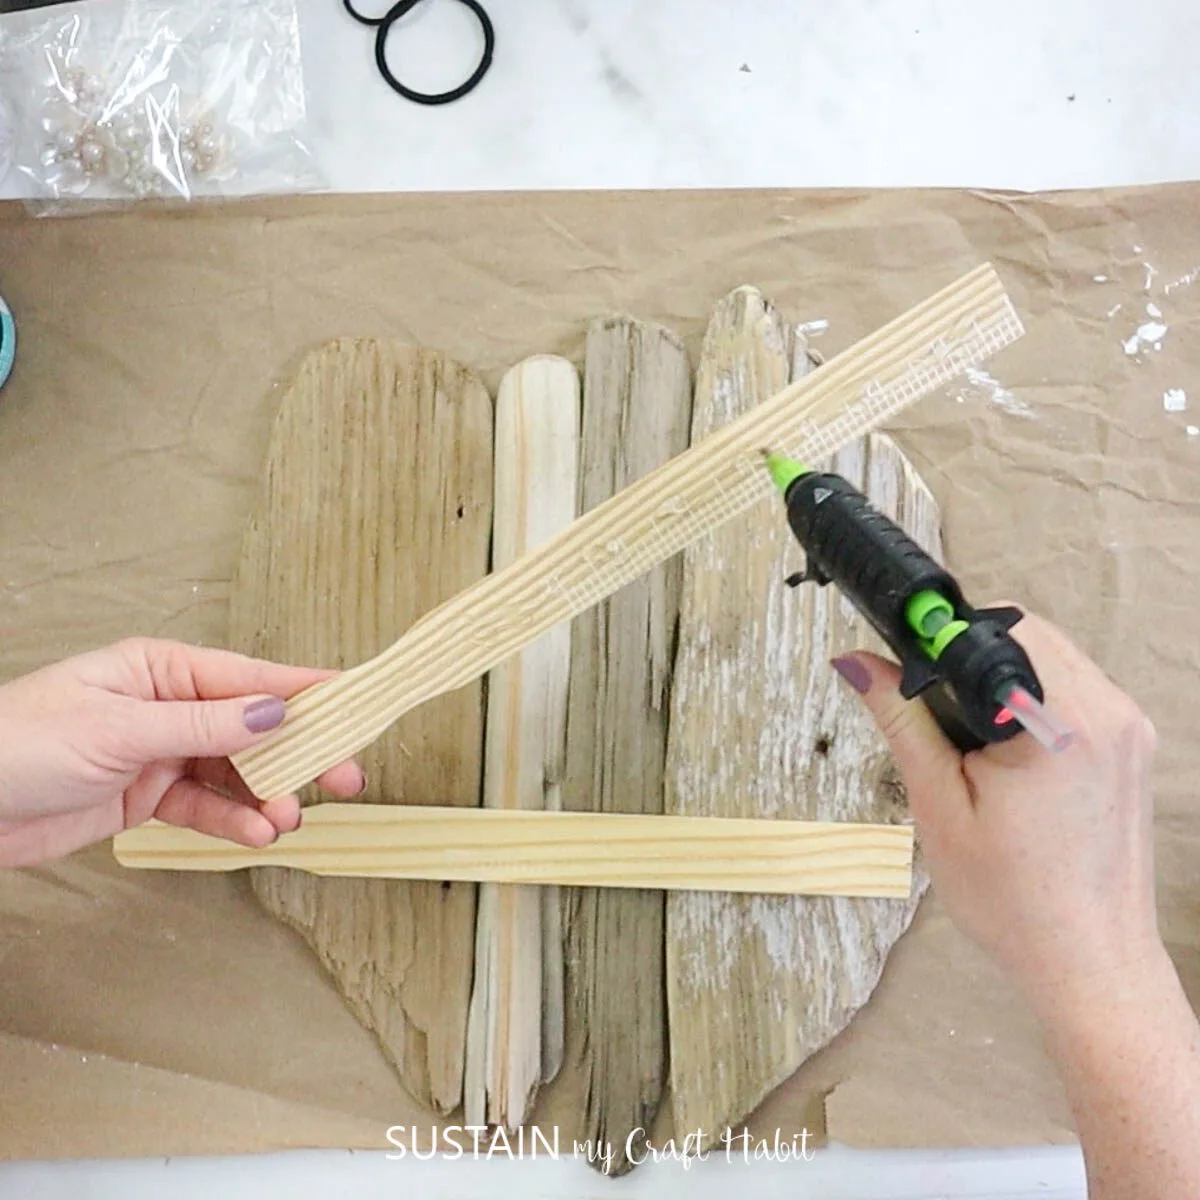 Adding hot glue to paint sticks.